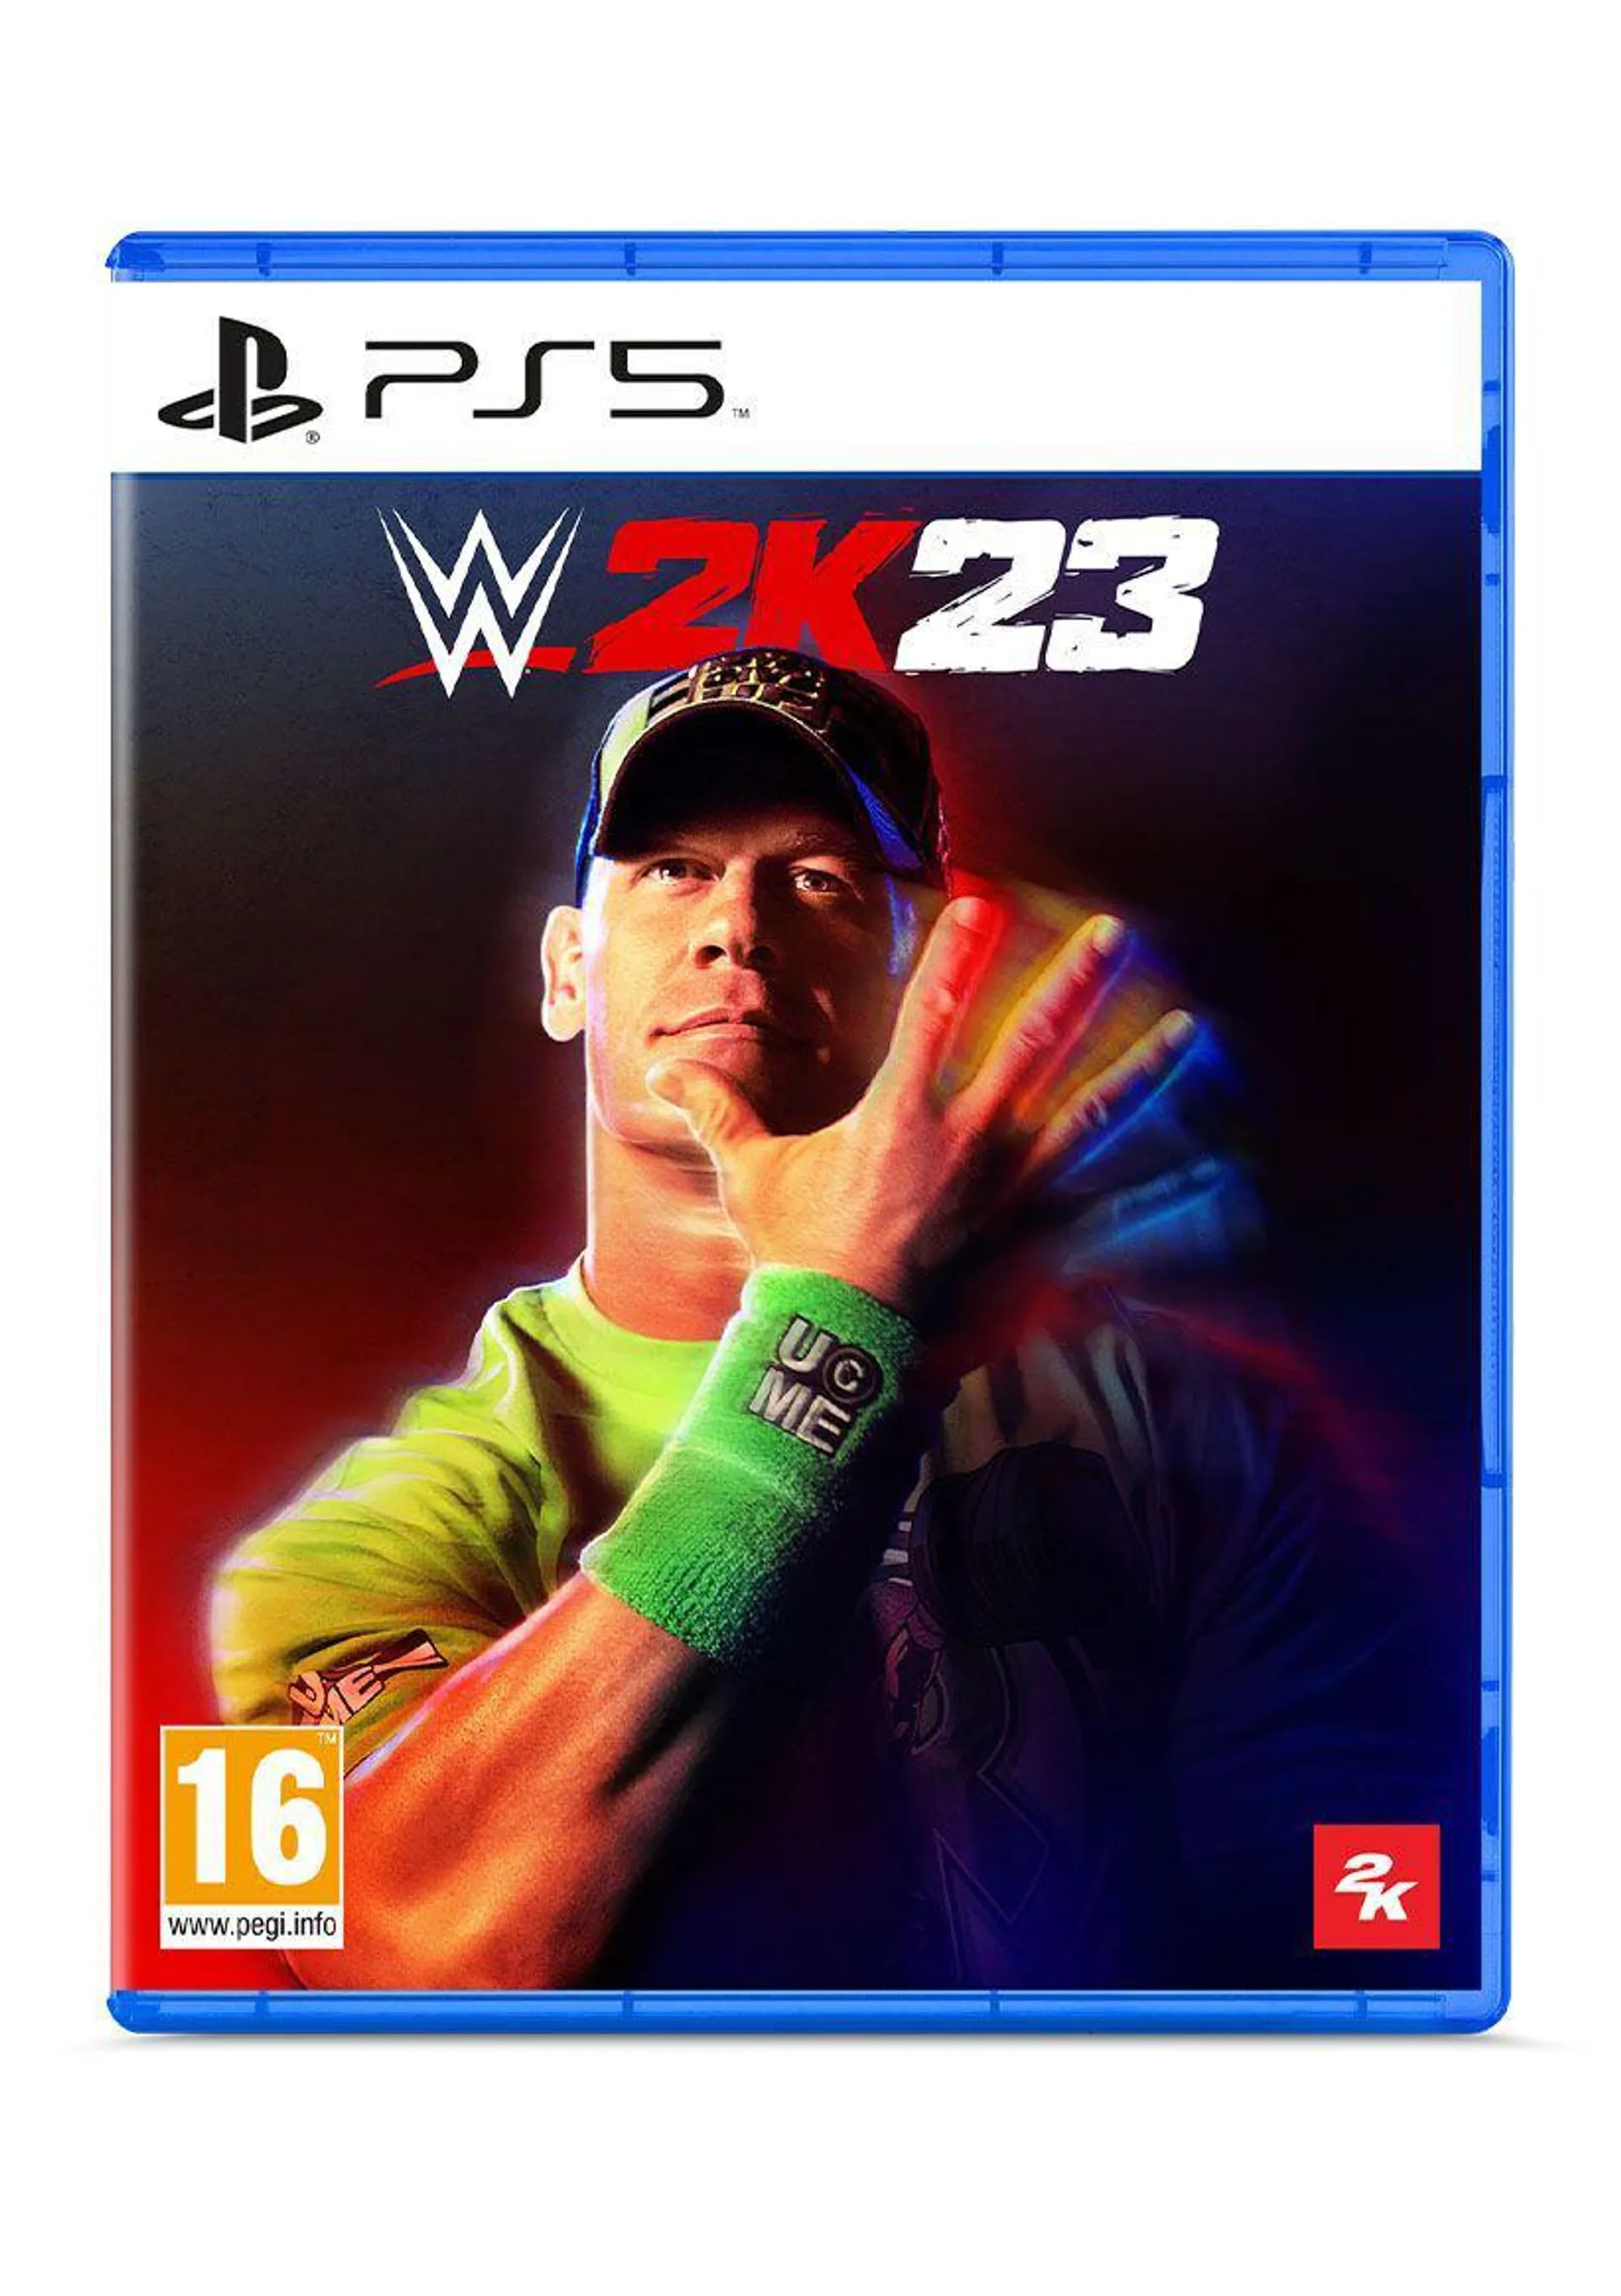 WWE 2K23 on PlayStation 5